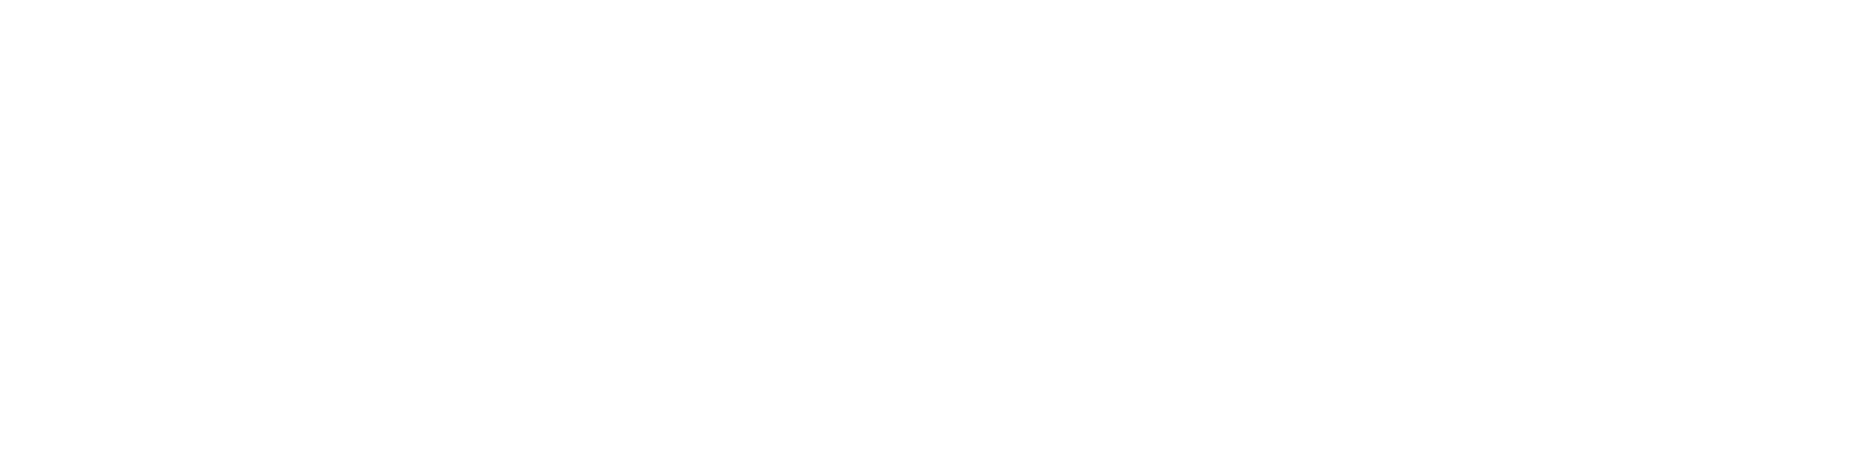 Chitra Martin Realty, Beverly Hills, California